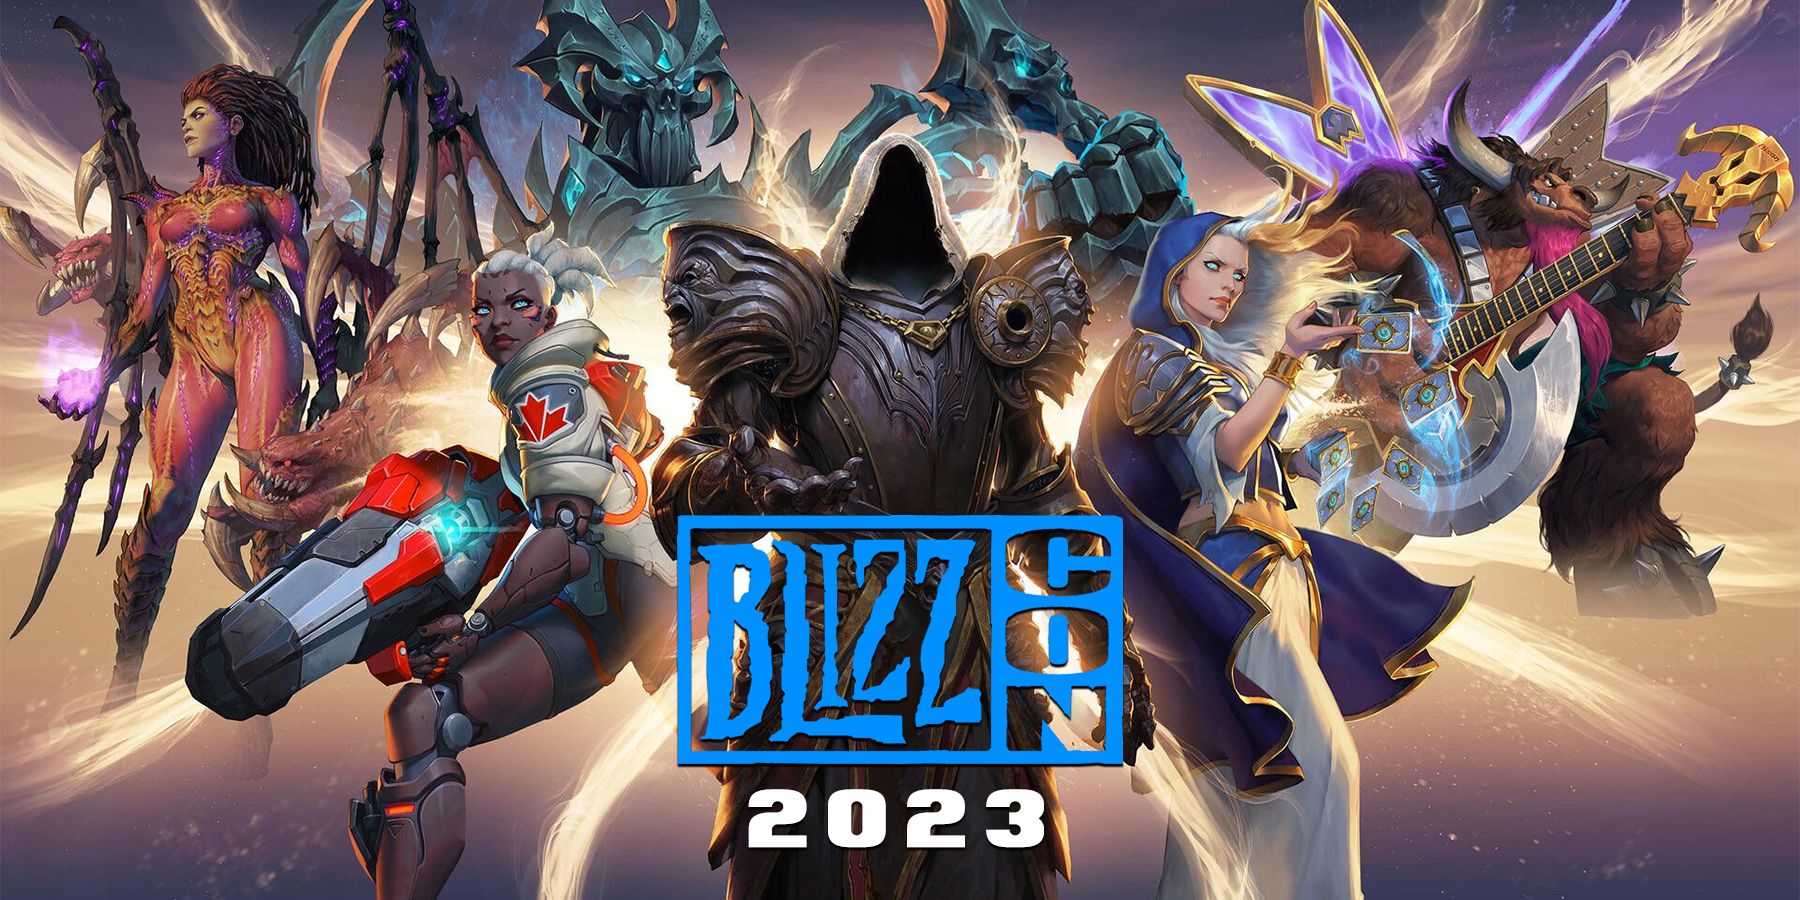 blizzcon 2023 coming back blizzard entertainment confirms